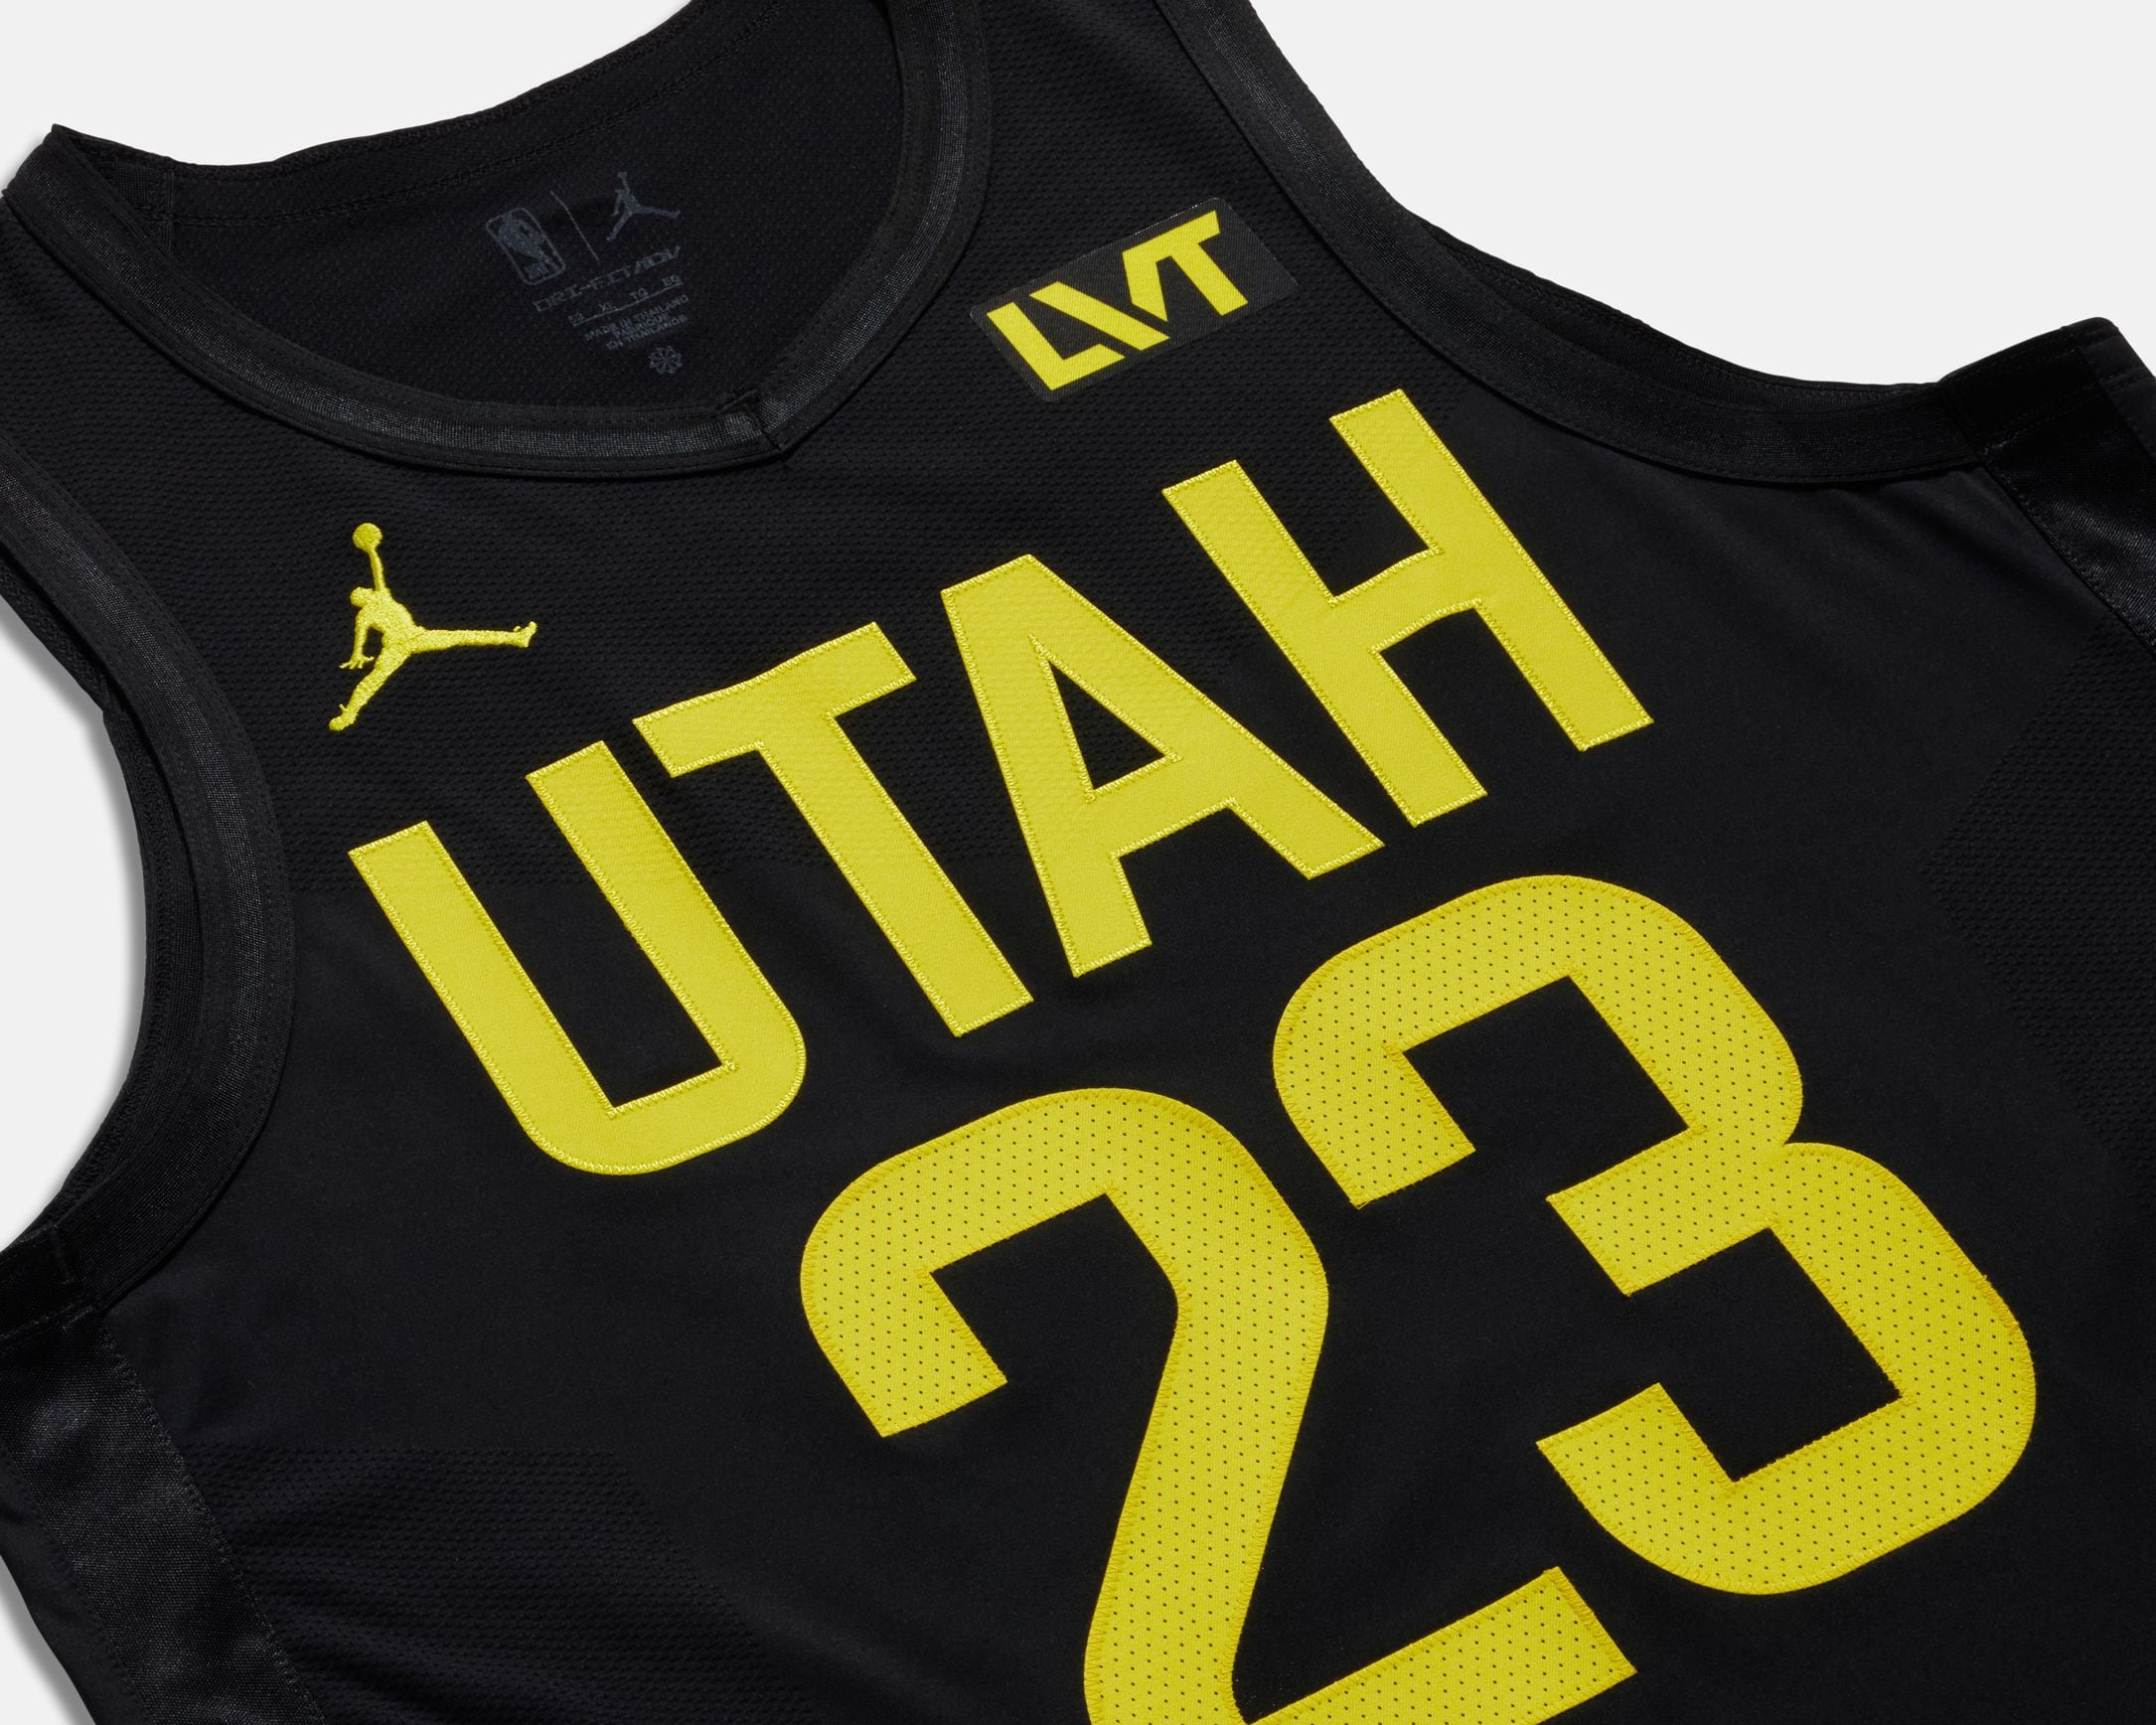 Utah Jazz announce LiveView Technologies as jersey patch sponsor